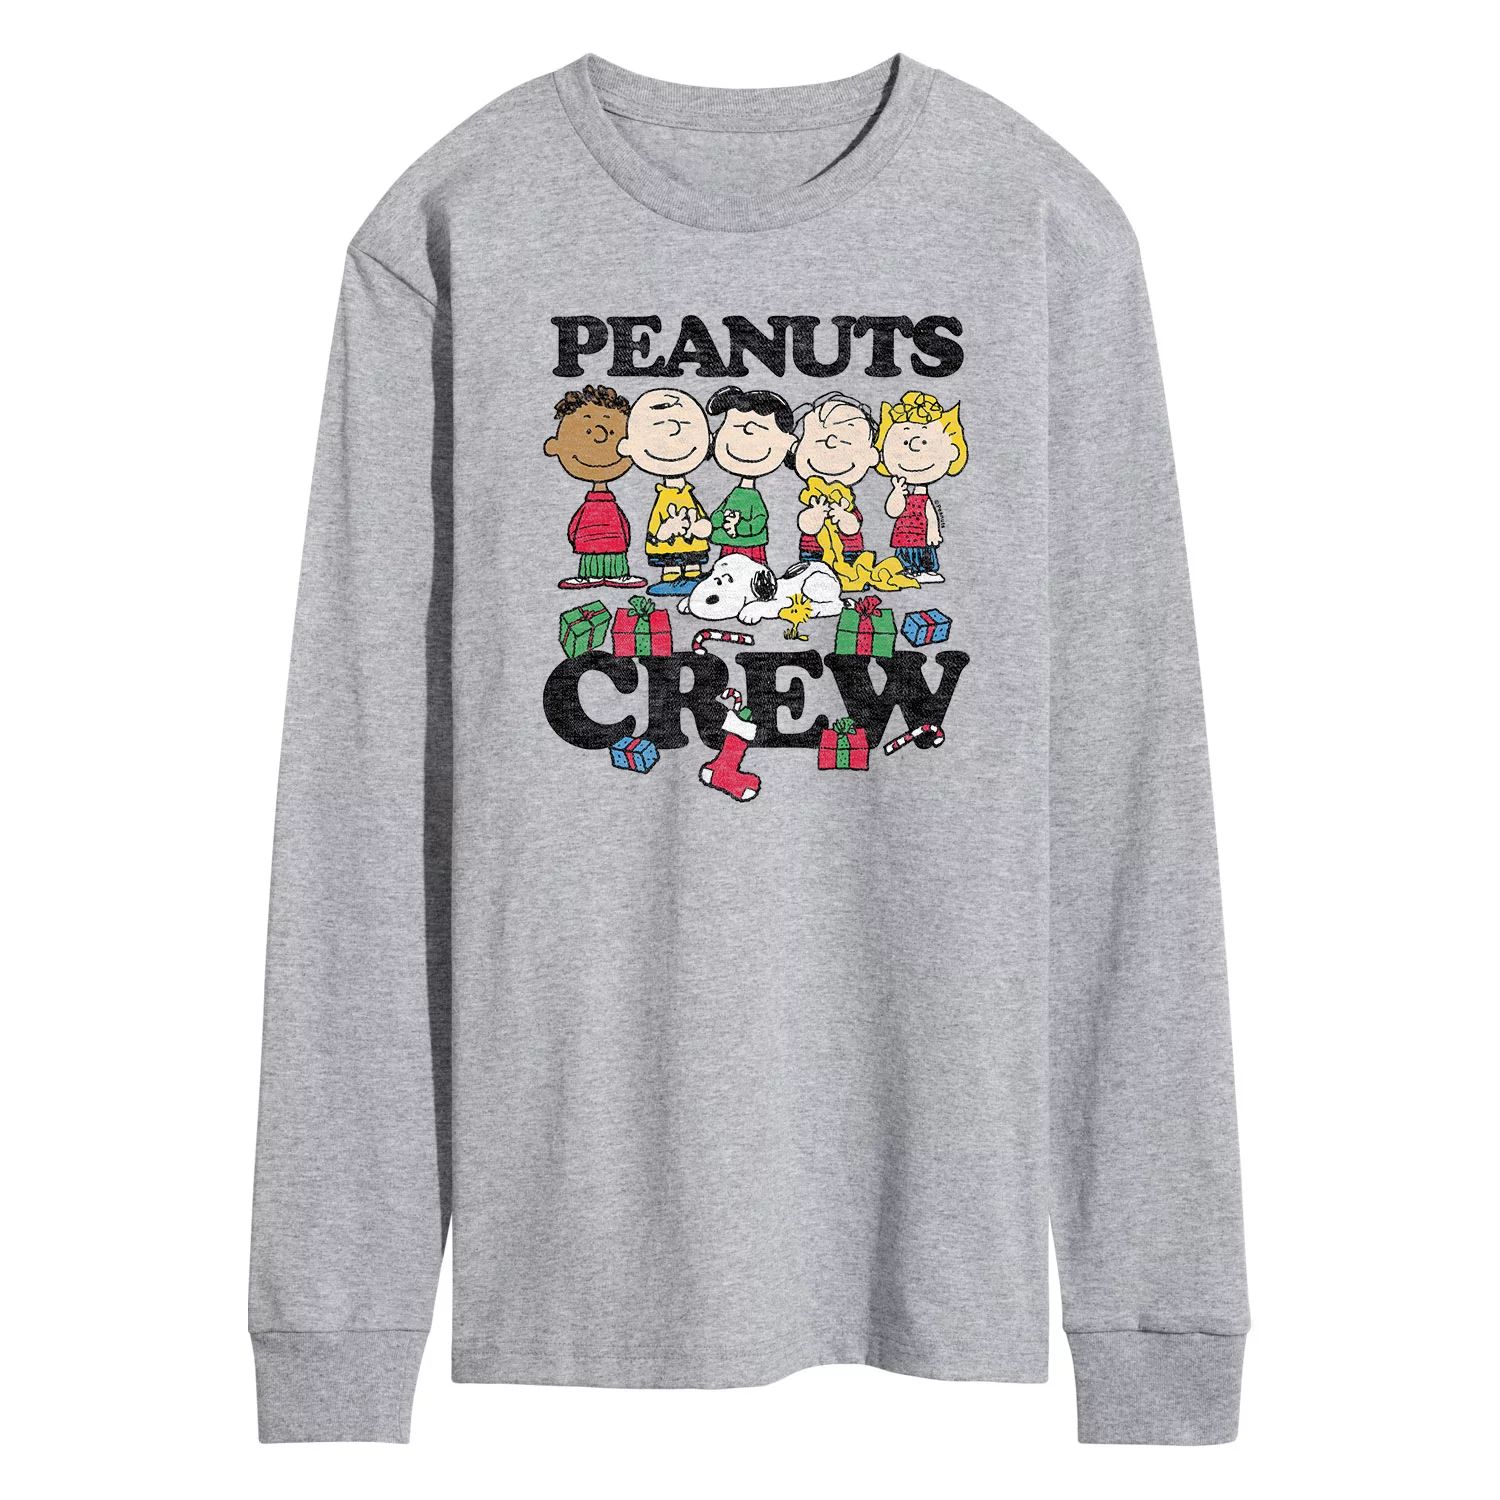 Мужская футболка Peanuts Crew с длинными рукавами Licensed Character мужская футболка с длинными рукавами peanuts xo kiss licensed character